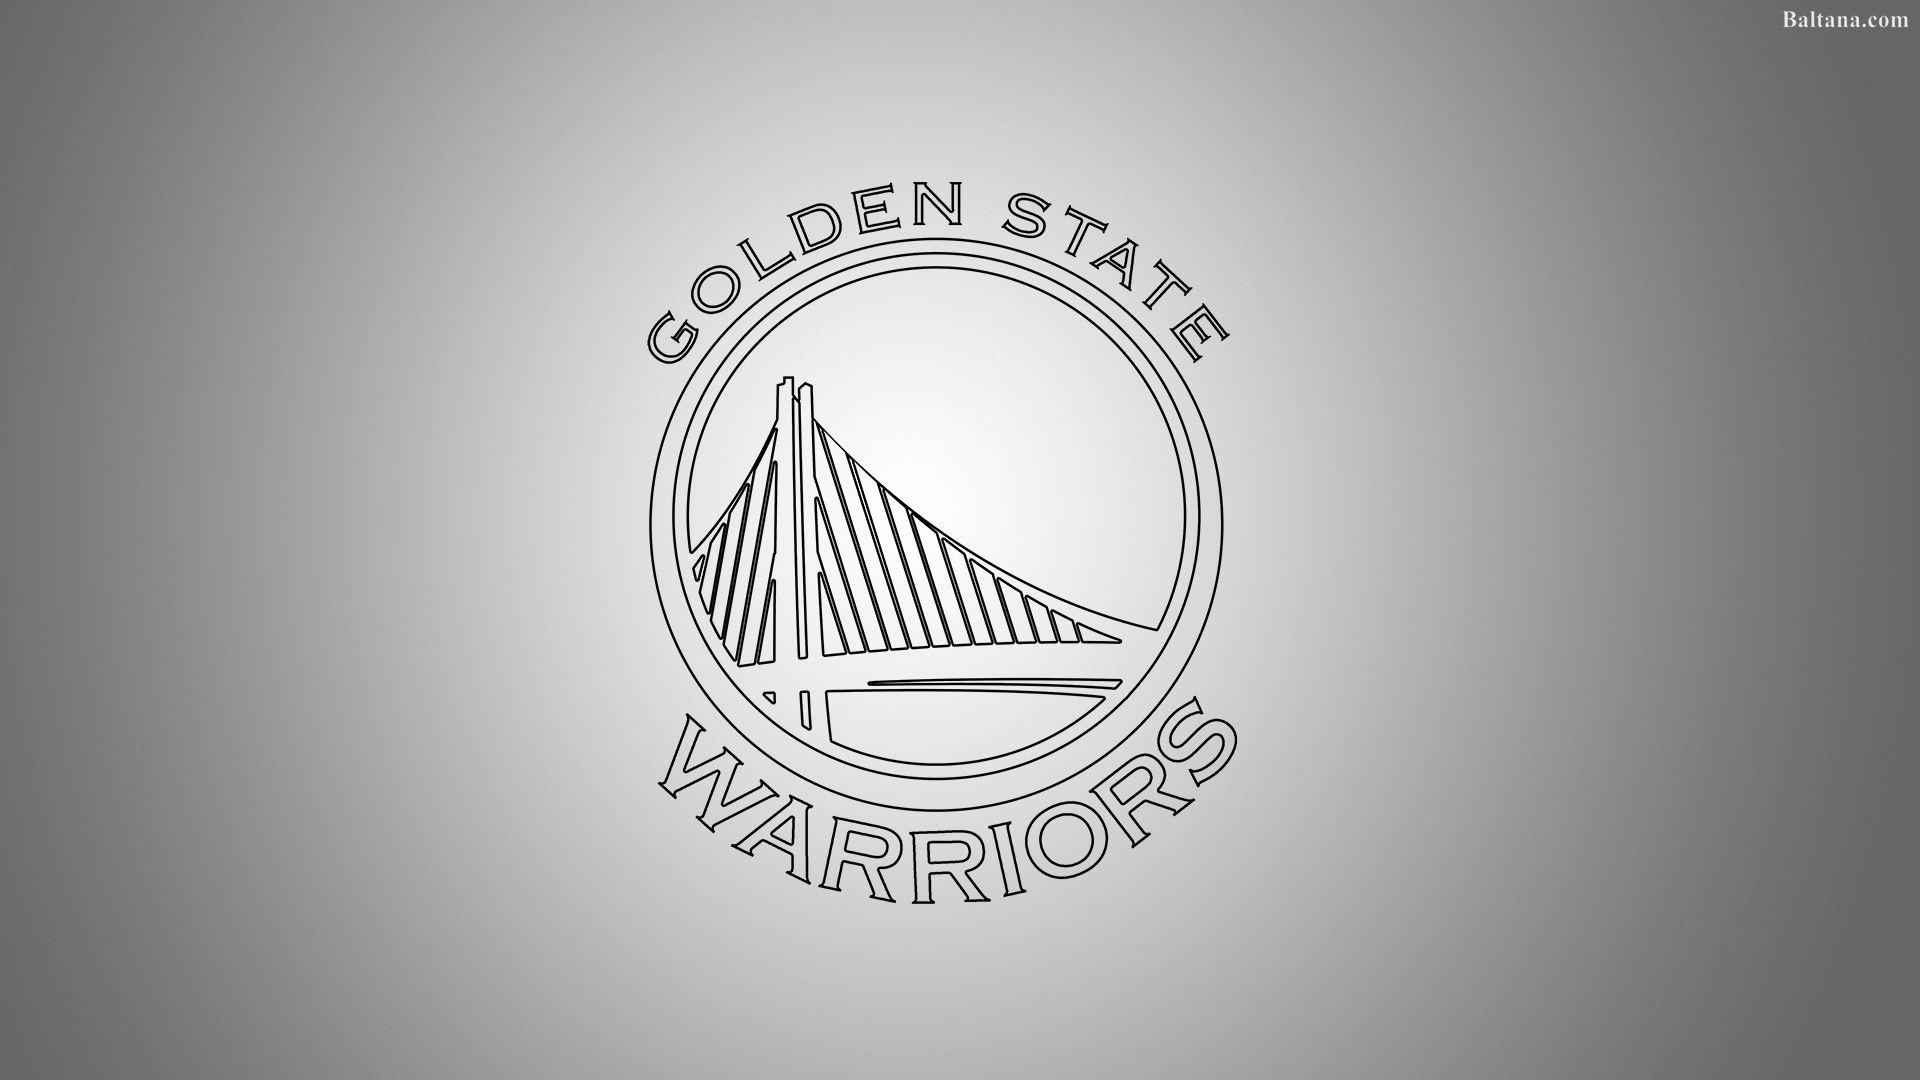 Golden State Warriors Wallpapers  Top Free Golden State Warriors  Backgrounds  WallpaperAccess